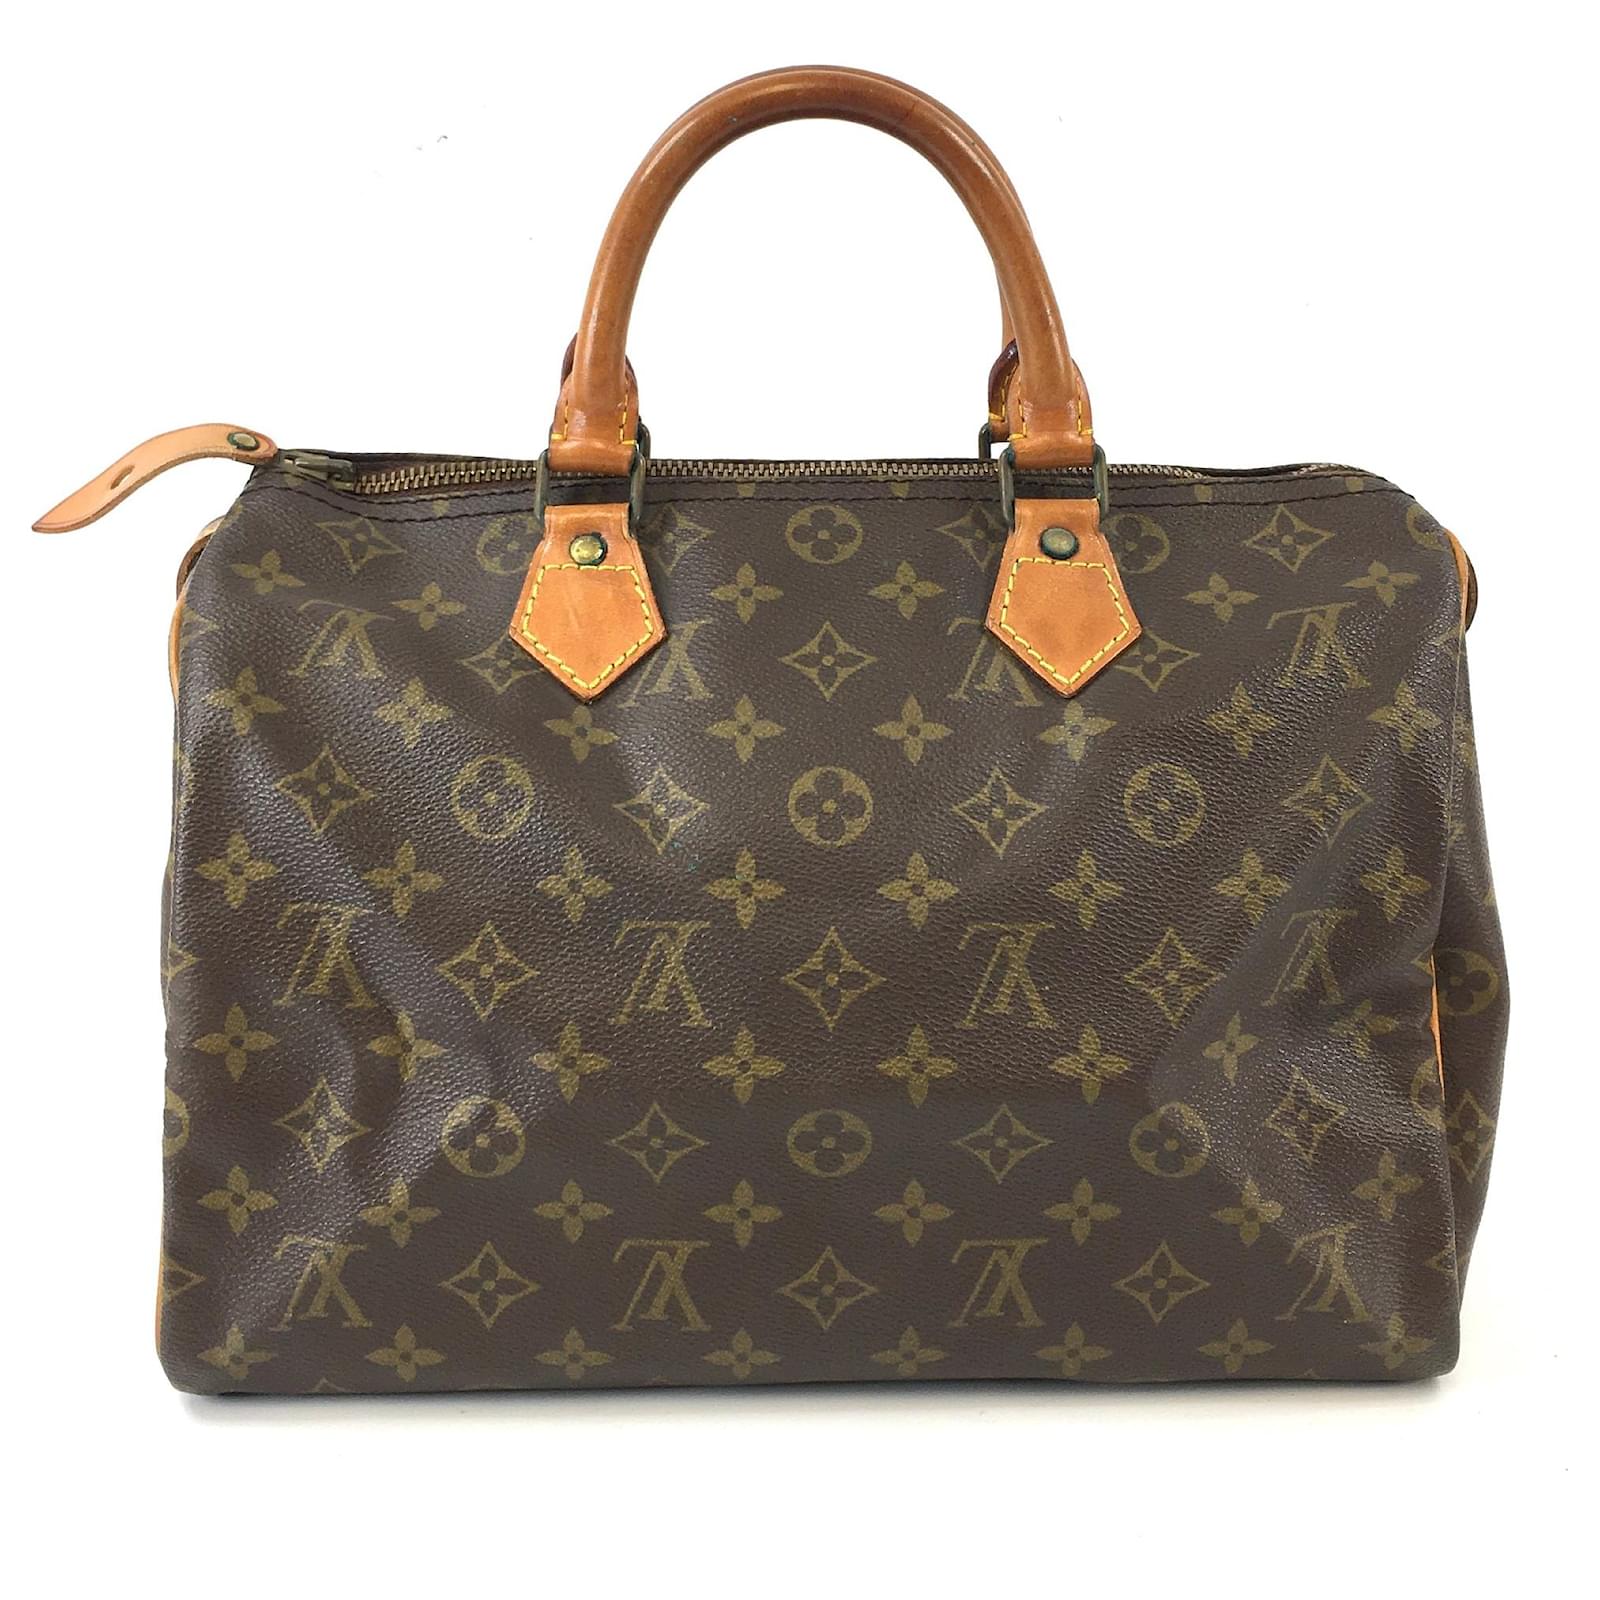 LOUIS VUITTON Authentic Speedy 30 Monogram Satchel Handbag Bag